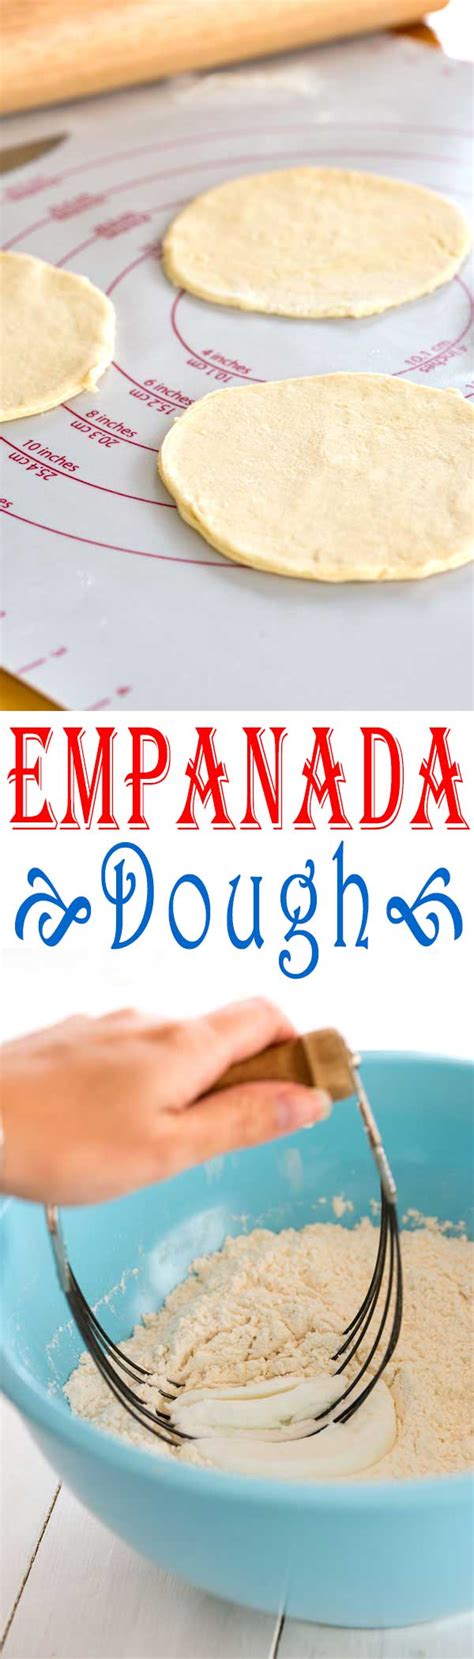 Empanada Dough Recipe For Frying Kitchen Gidget